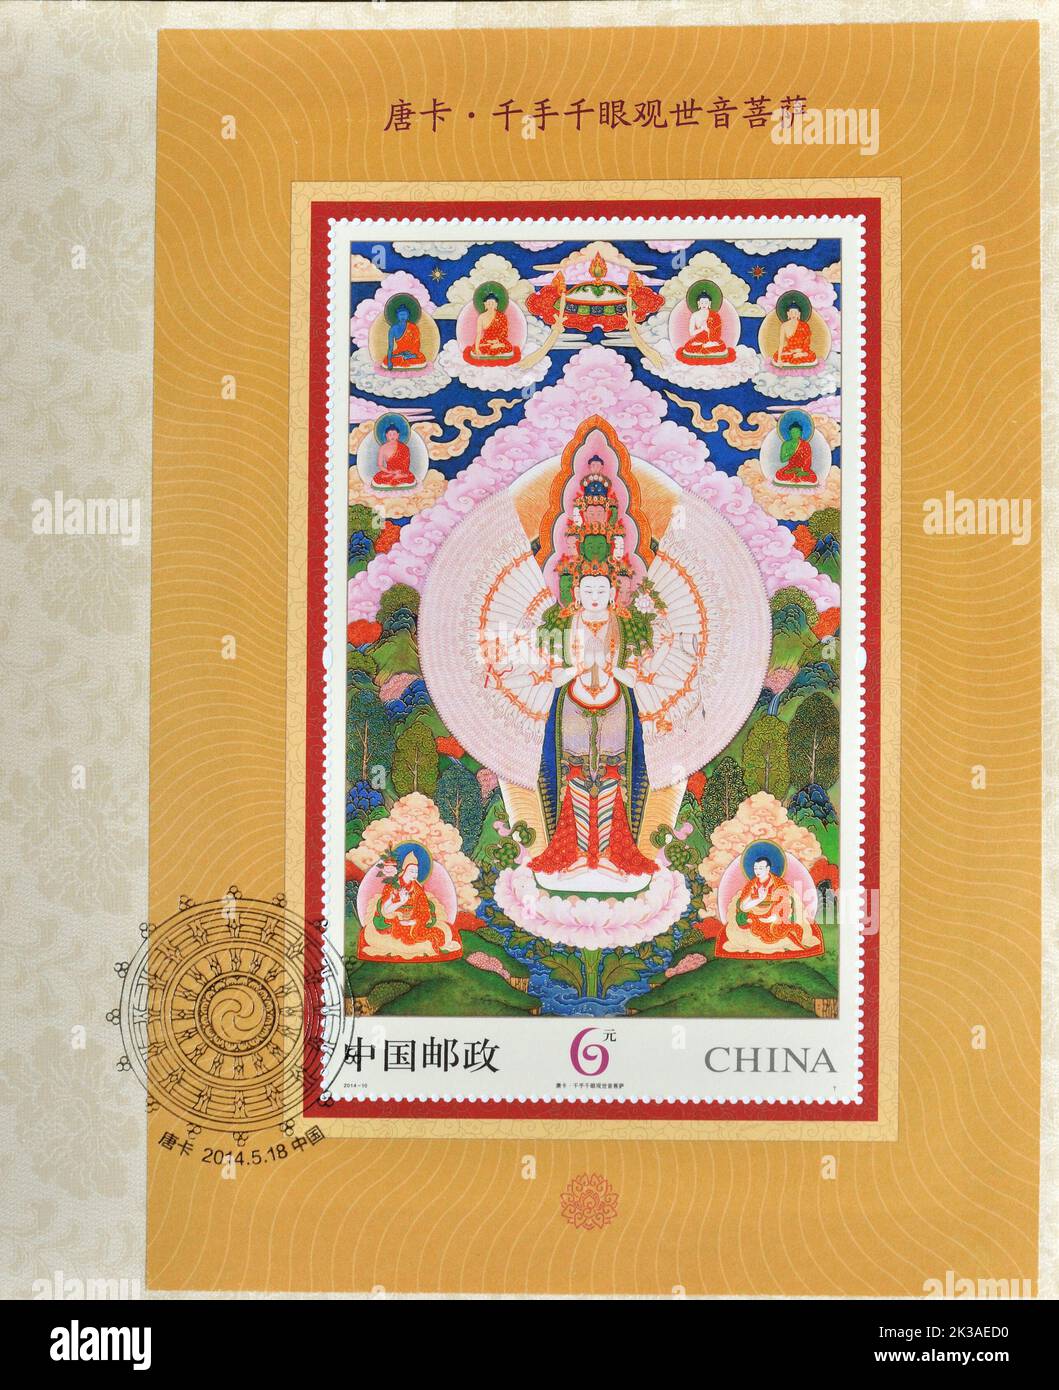 CHINE - VERS 2014: Un timbre imprimé en Chine montre 2014-10 Thangka (bannière bouddhiste) Sahasra-bhuja Sahasra-netra Avalokitesvara, vers 2014 Banque D'Images